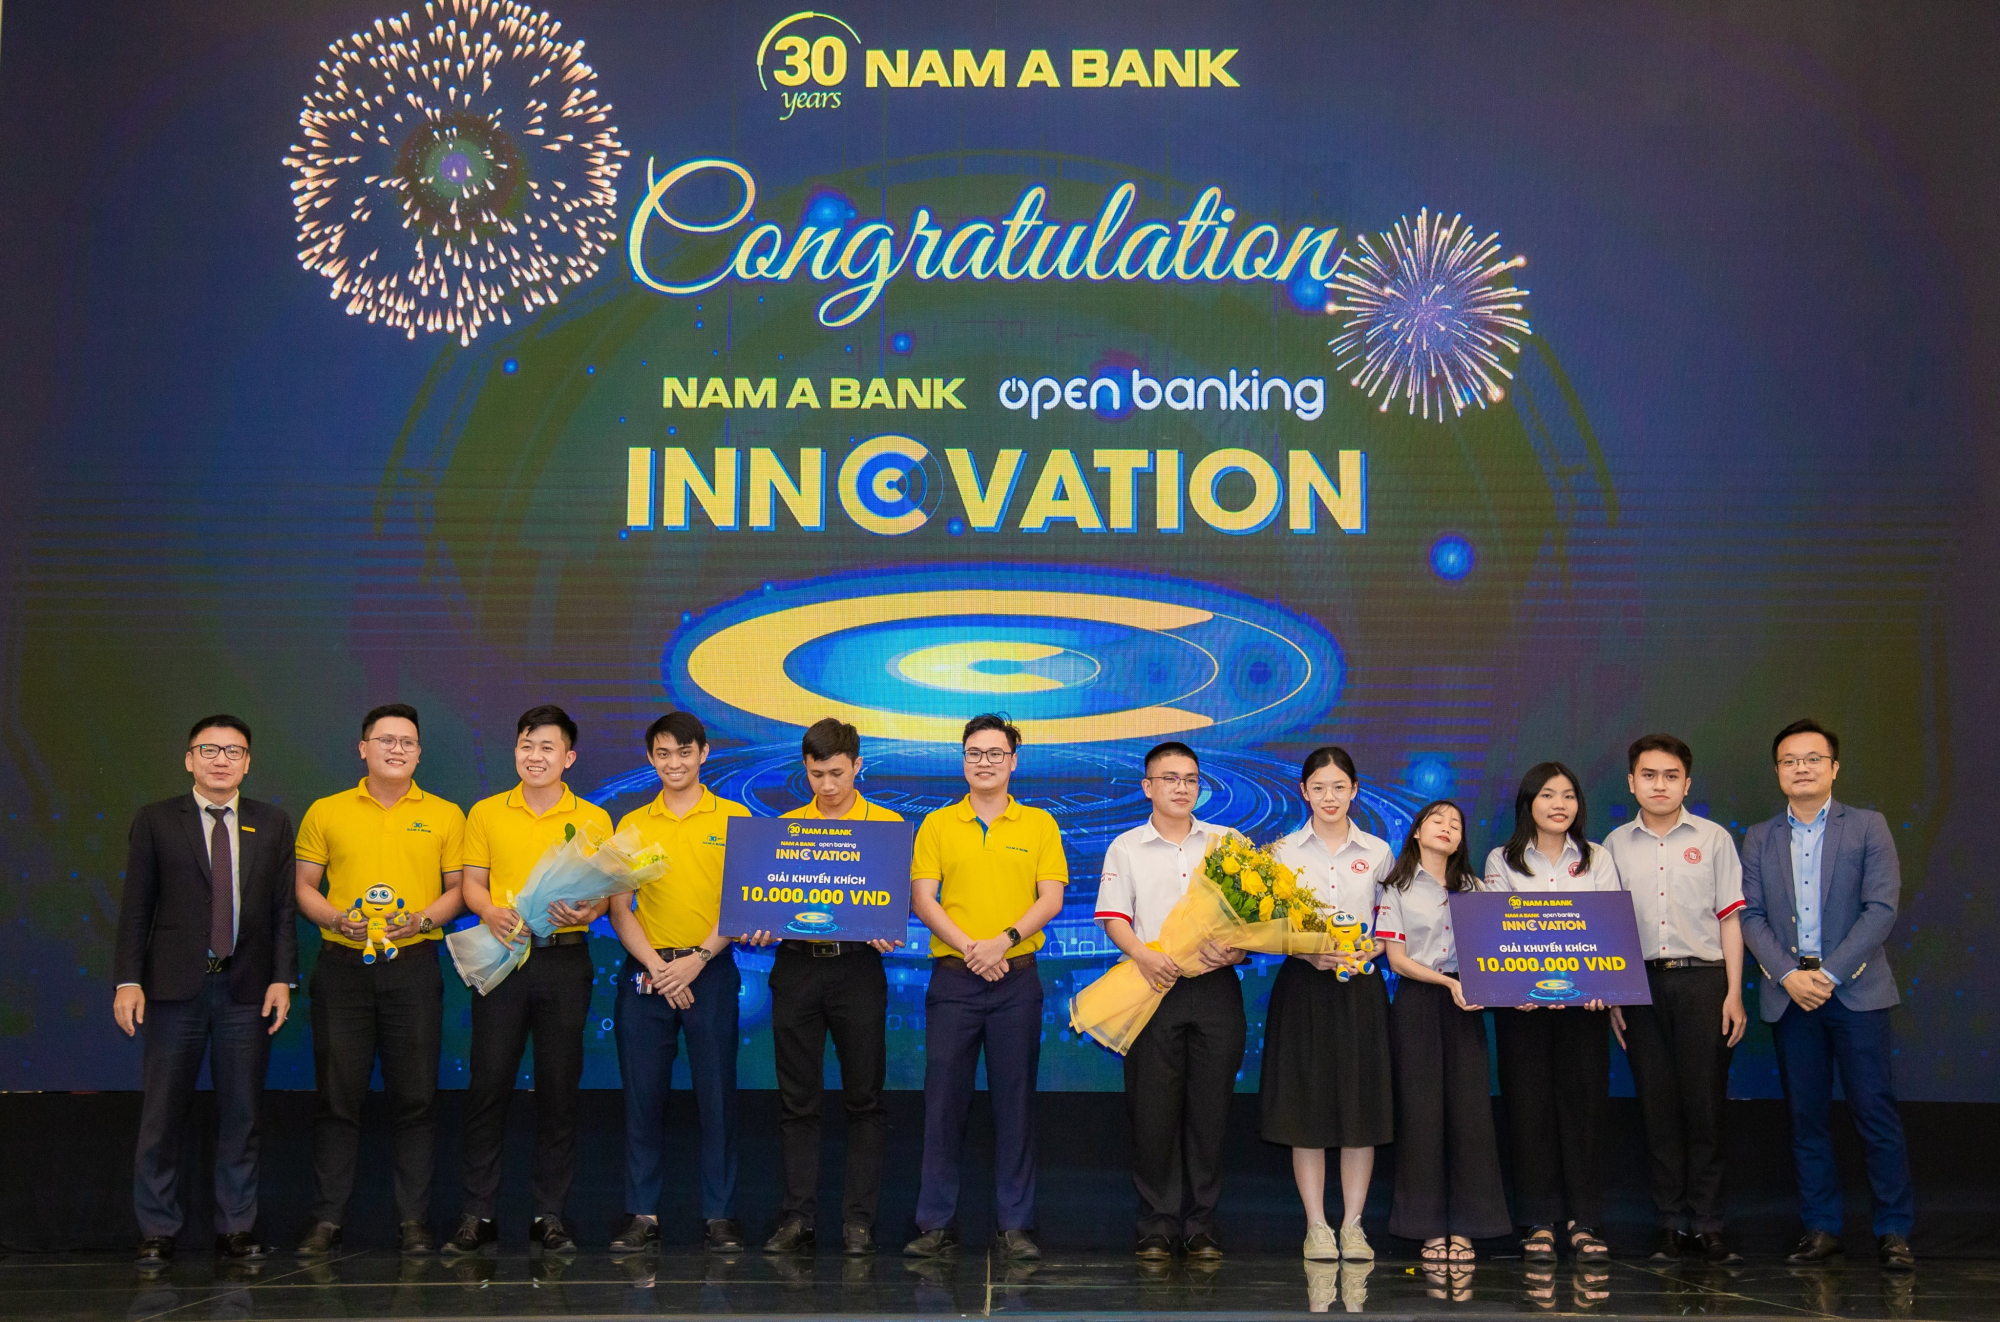 top 7 du an mang tinh ung dung cao duoc vinh danh tai cuoc thi nam a bank  openbanking innovation hinh 4